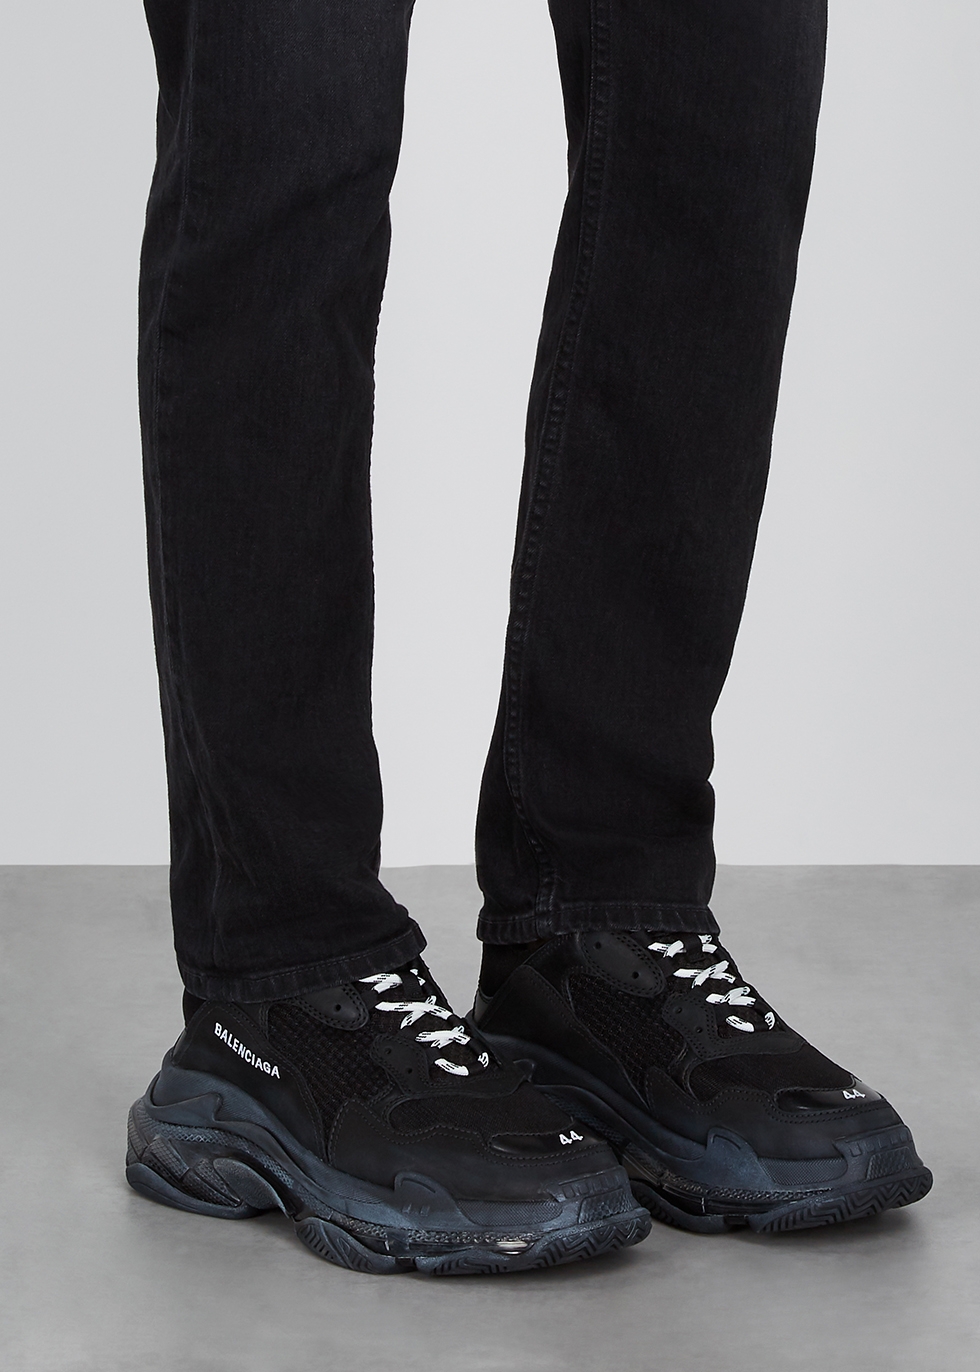 Balenciaga Black Triple S Sneakers Size EU 37 Approx US 7